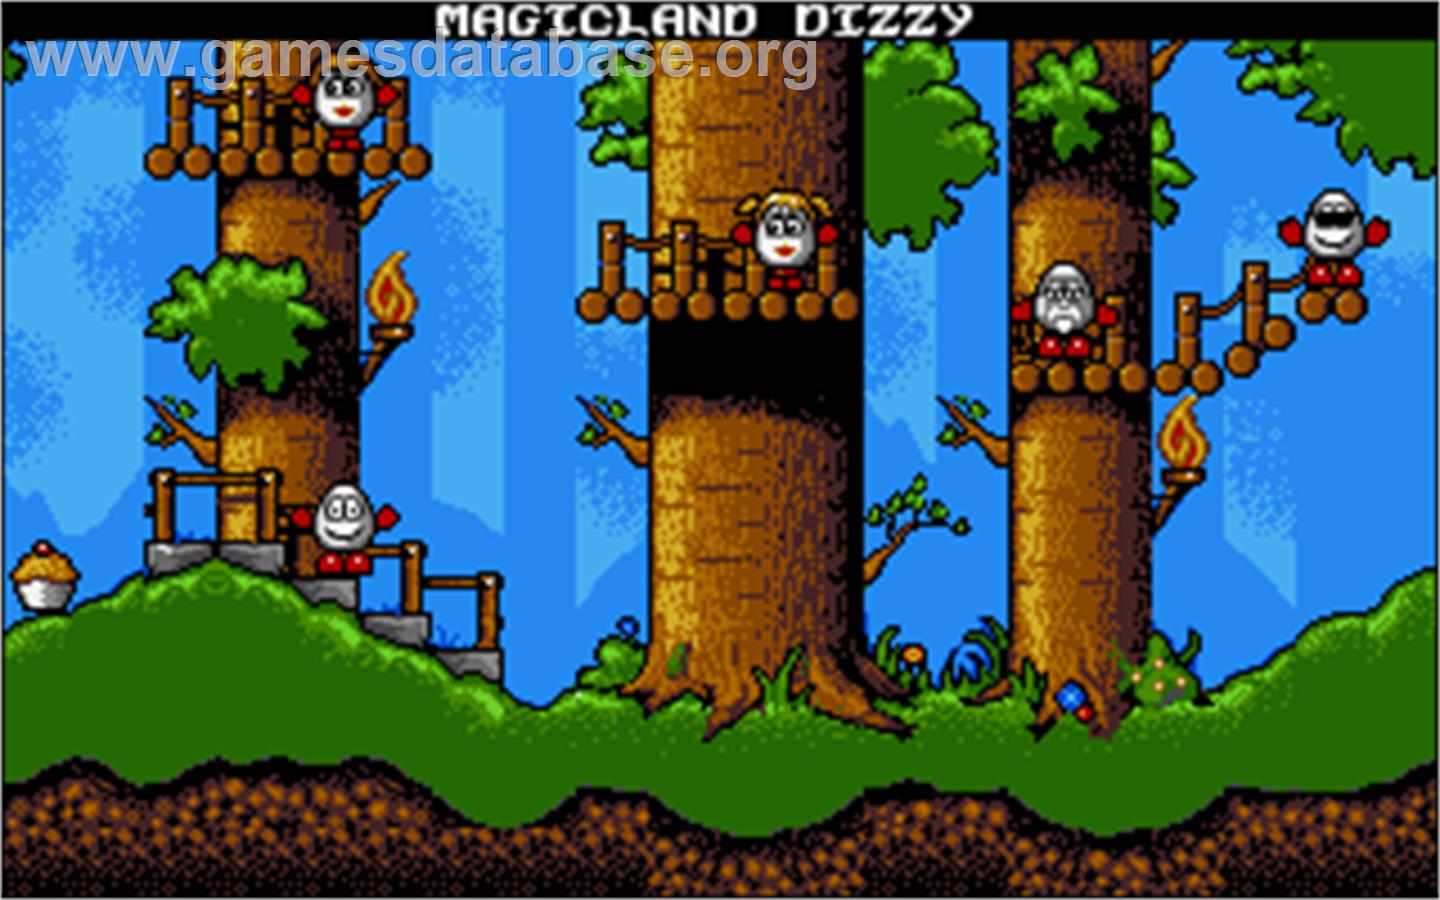 Magicland Dizzy - Atari ST - Artwork - In Game